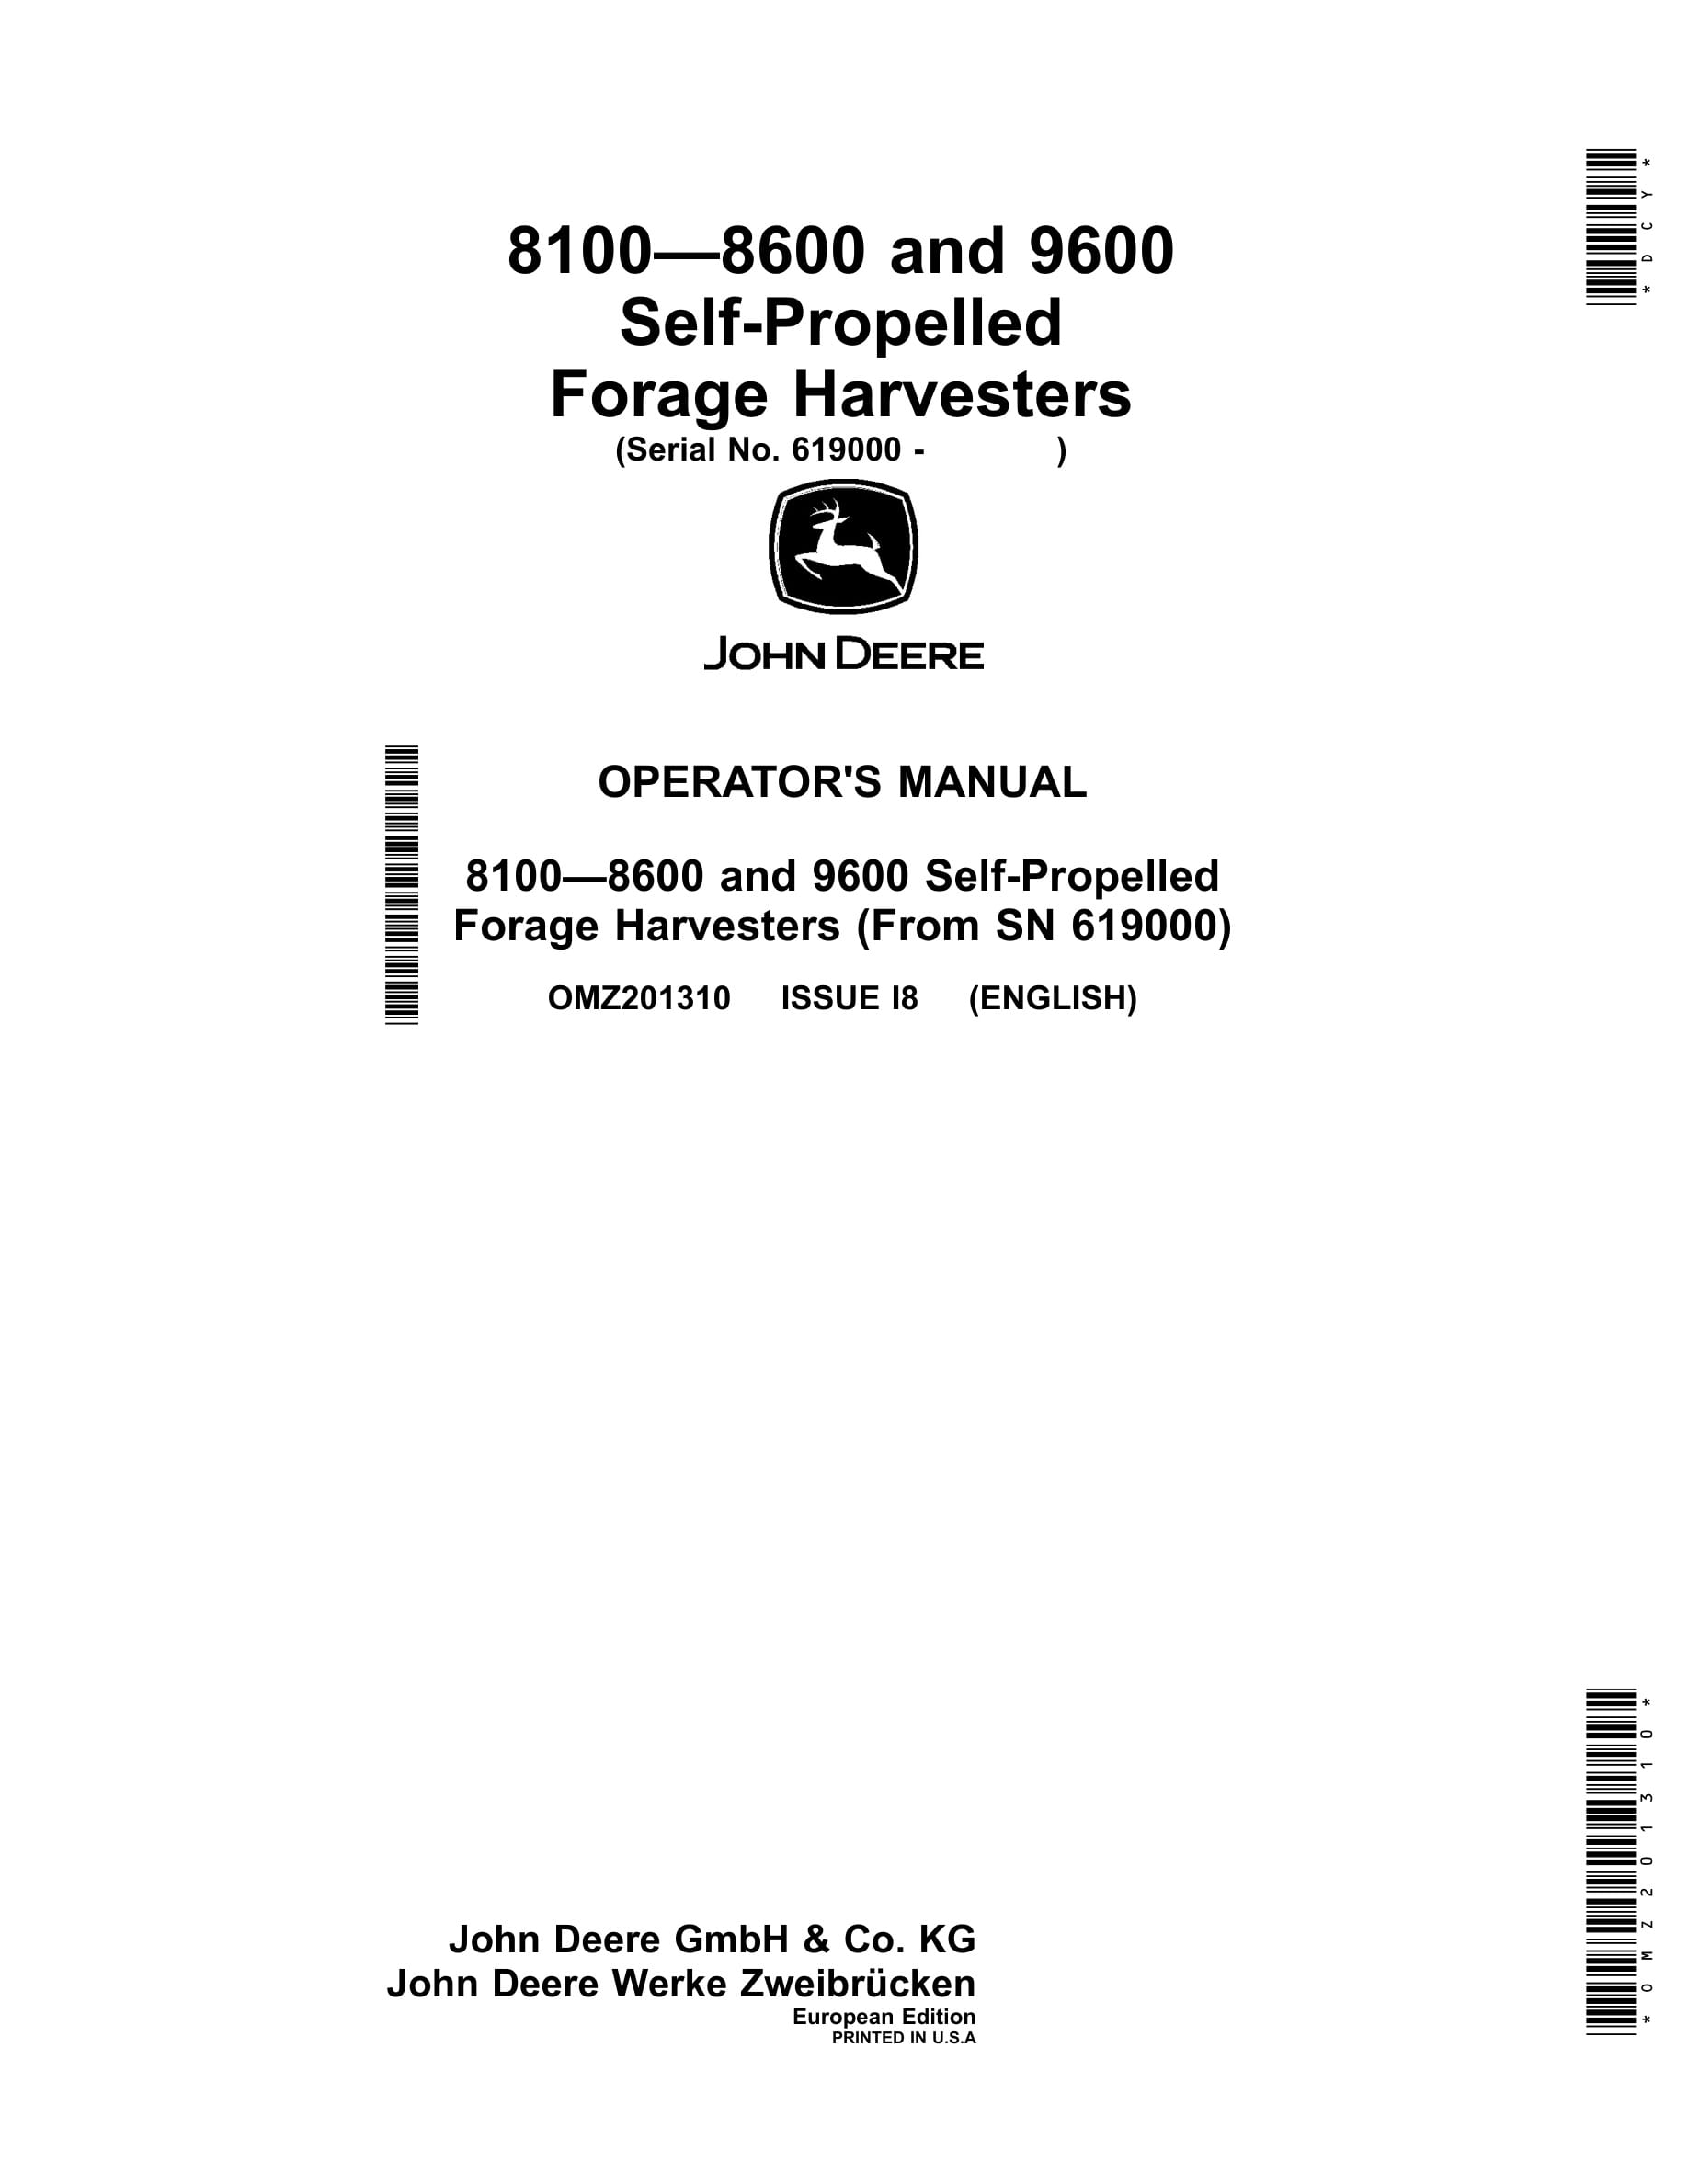 John Deere 8100 – 8800 Self-Propelled Forage Harvester Operator Manual OMZ201310-1